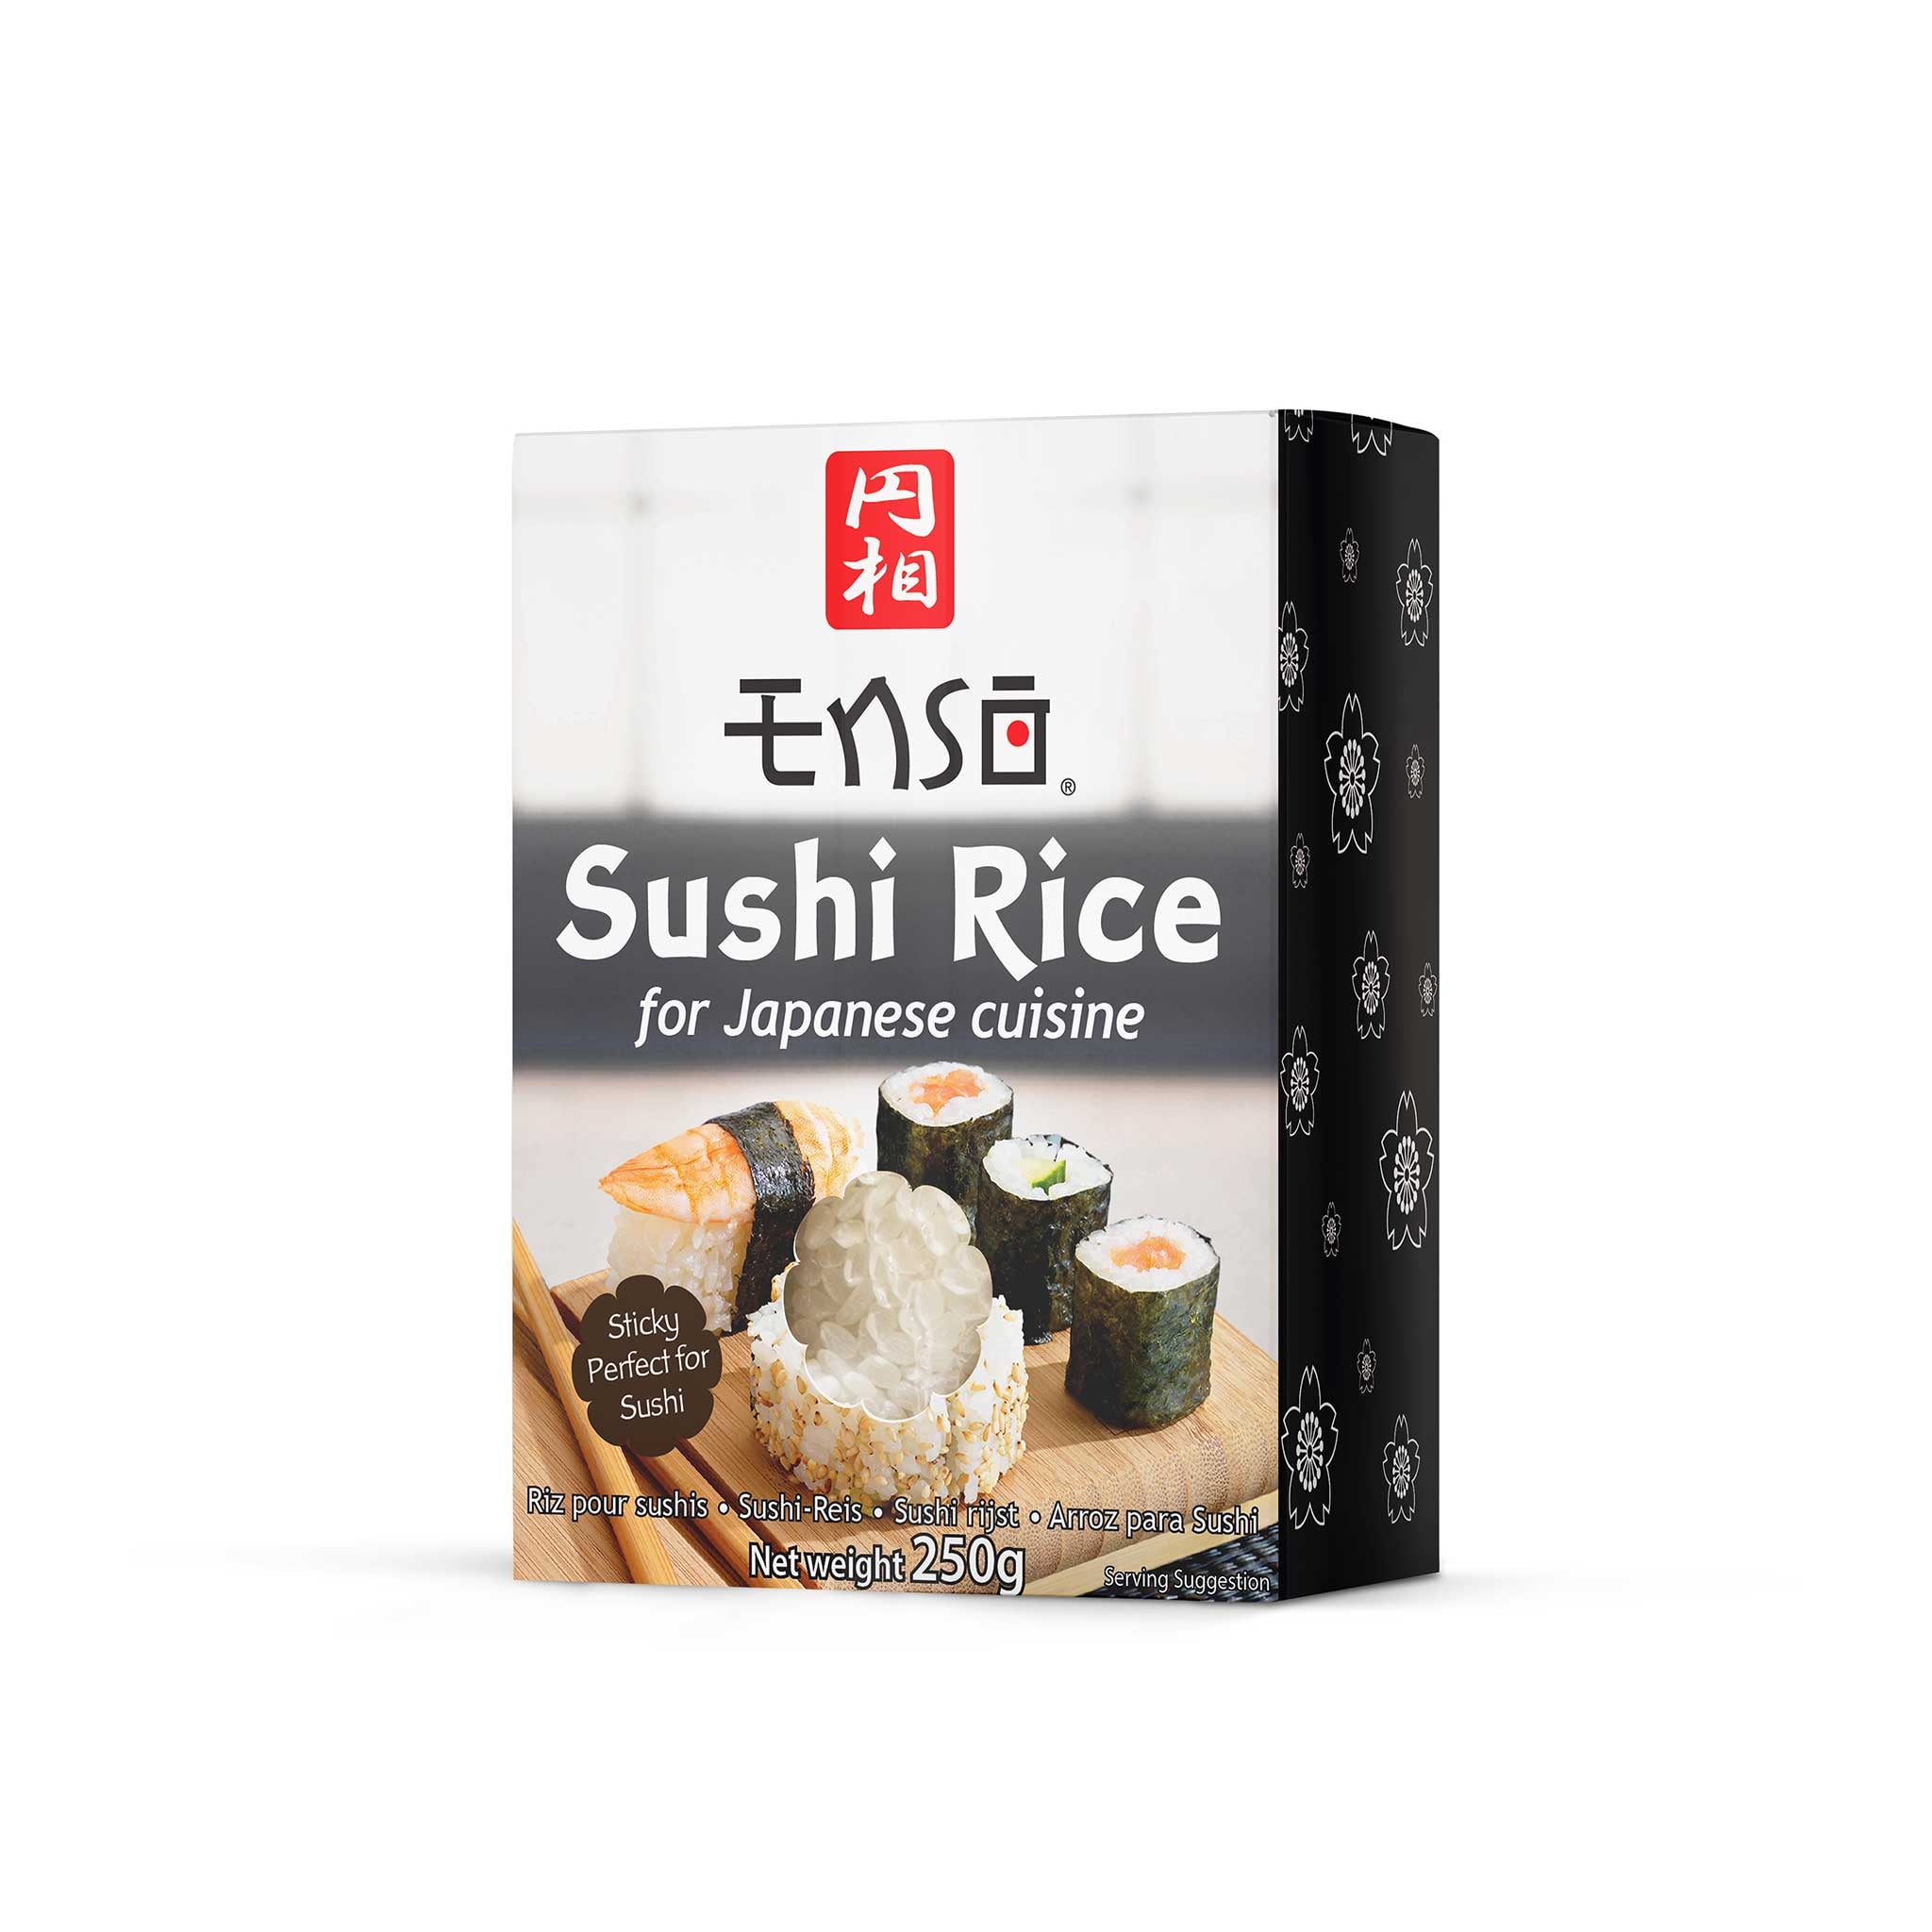 Riso per sushi - deSIAMCuisine (Thailand) Co Ltd